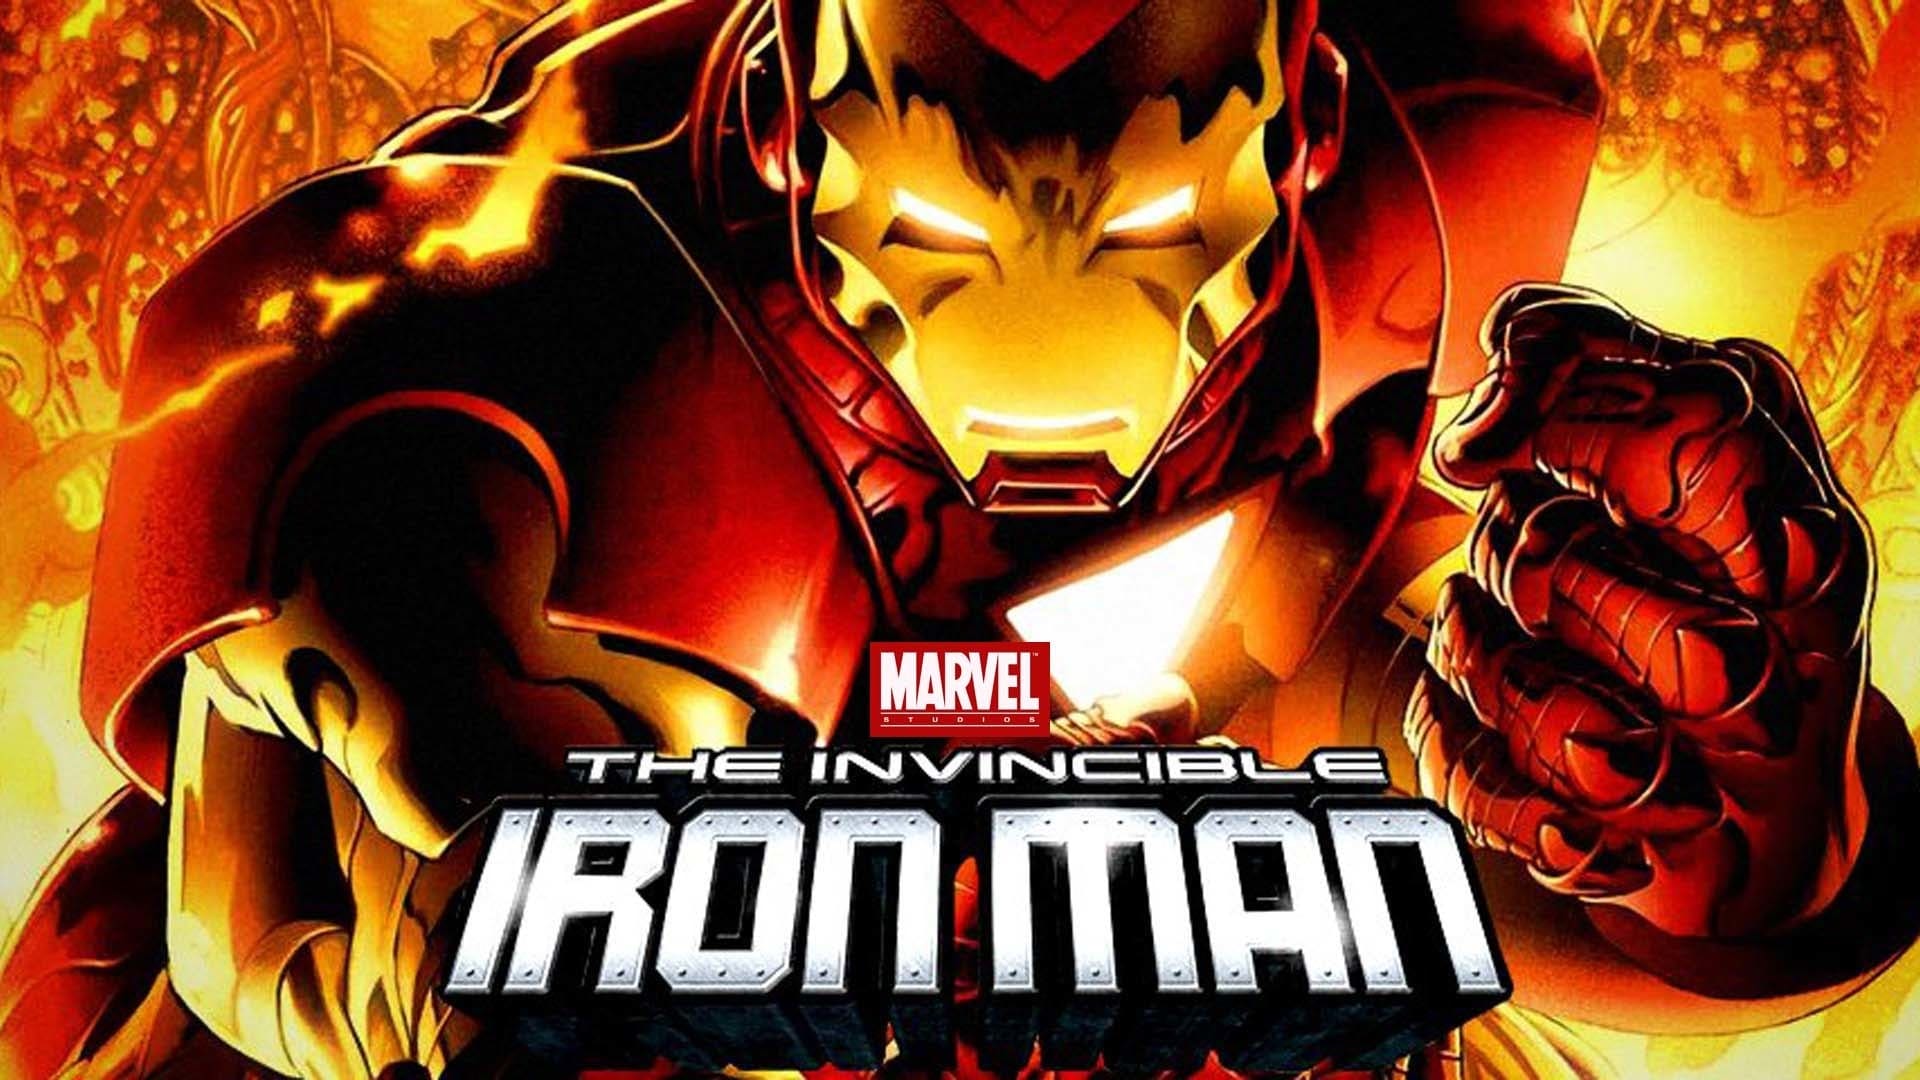 iron man full movie 123movies